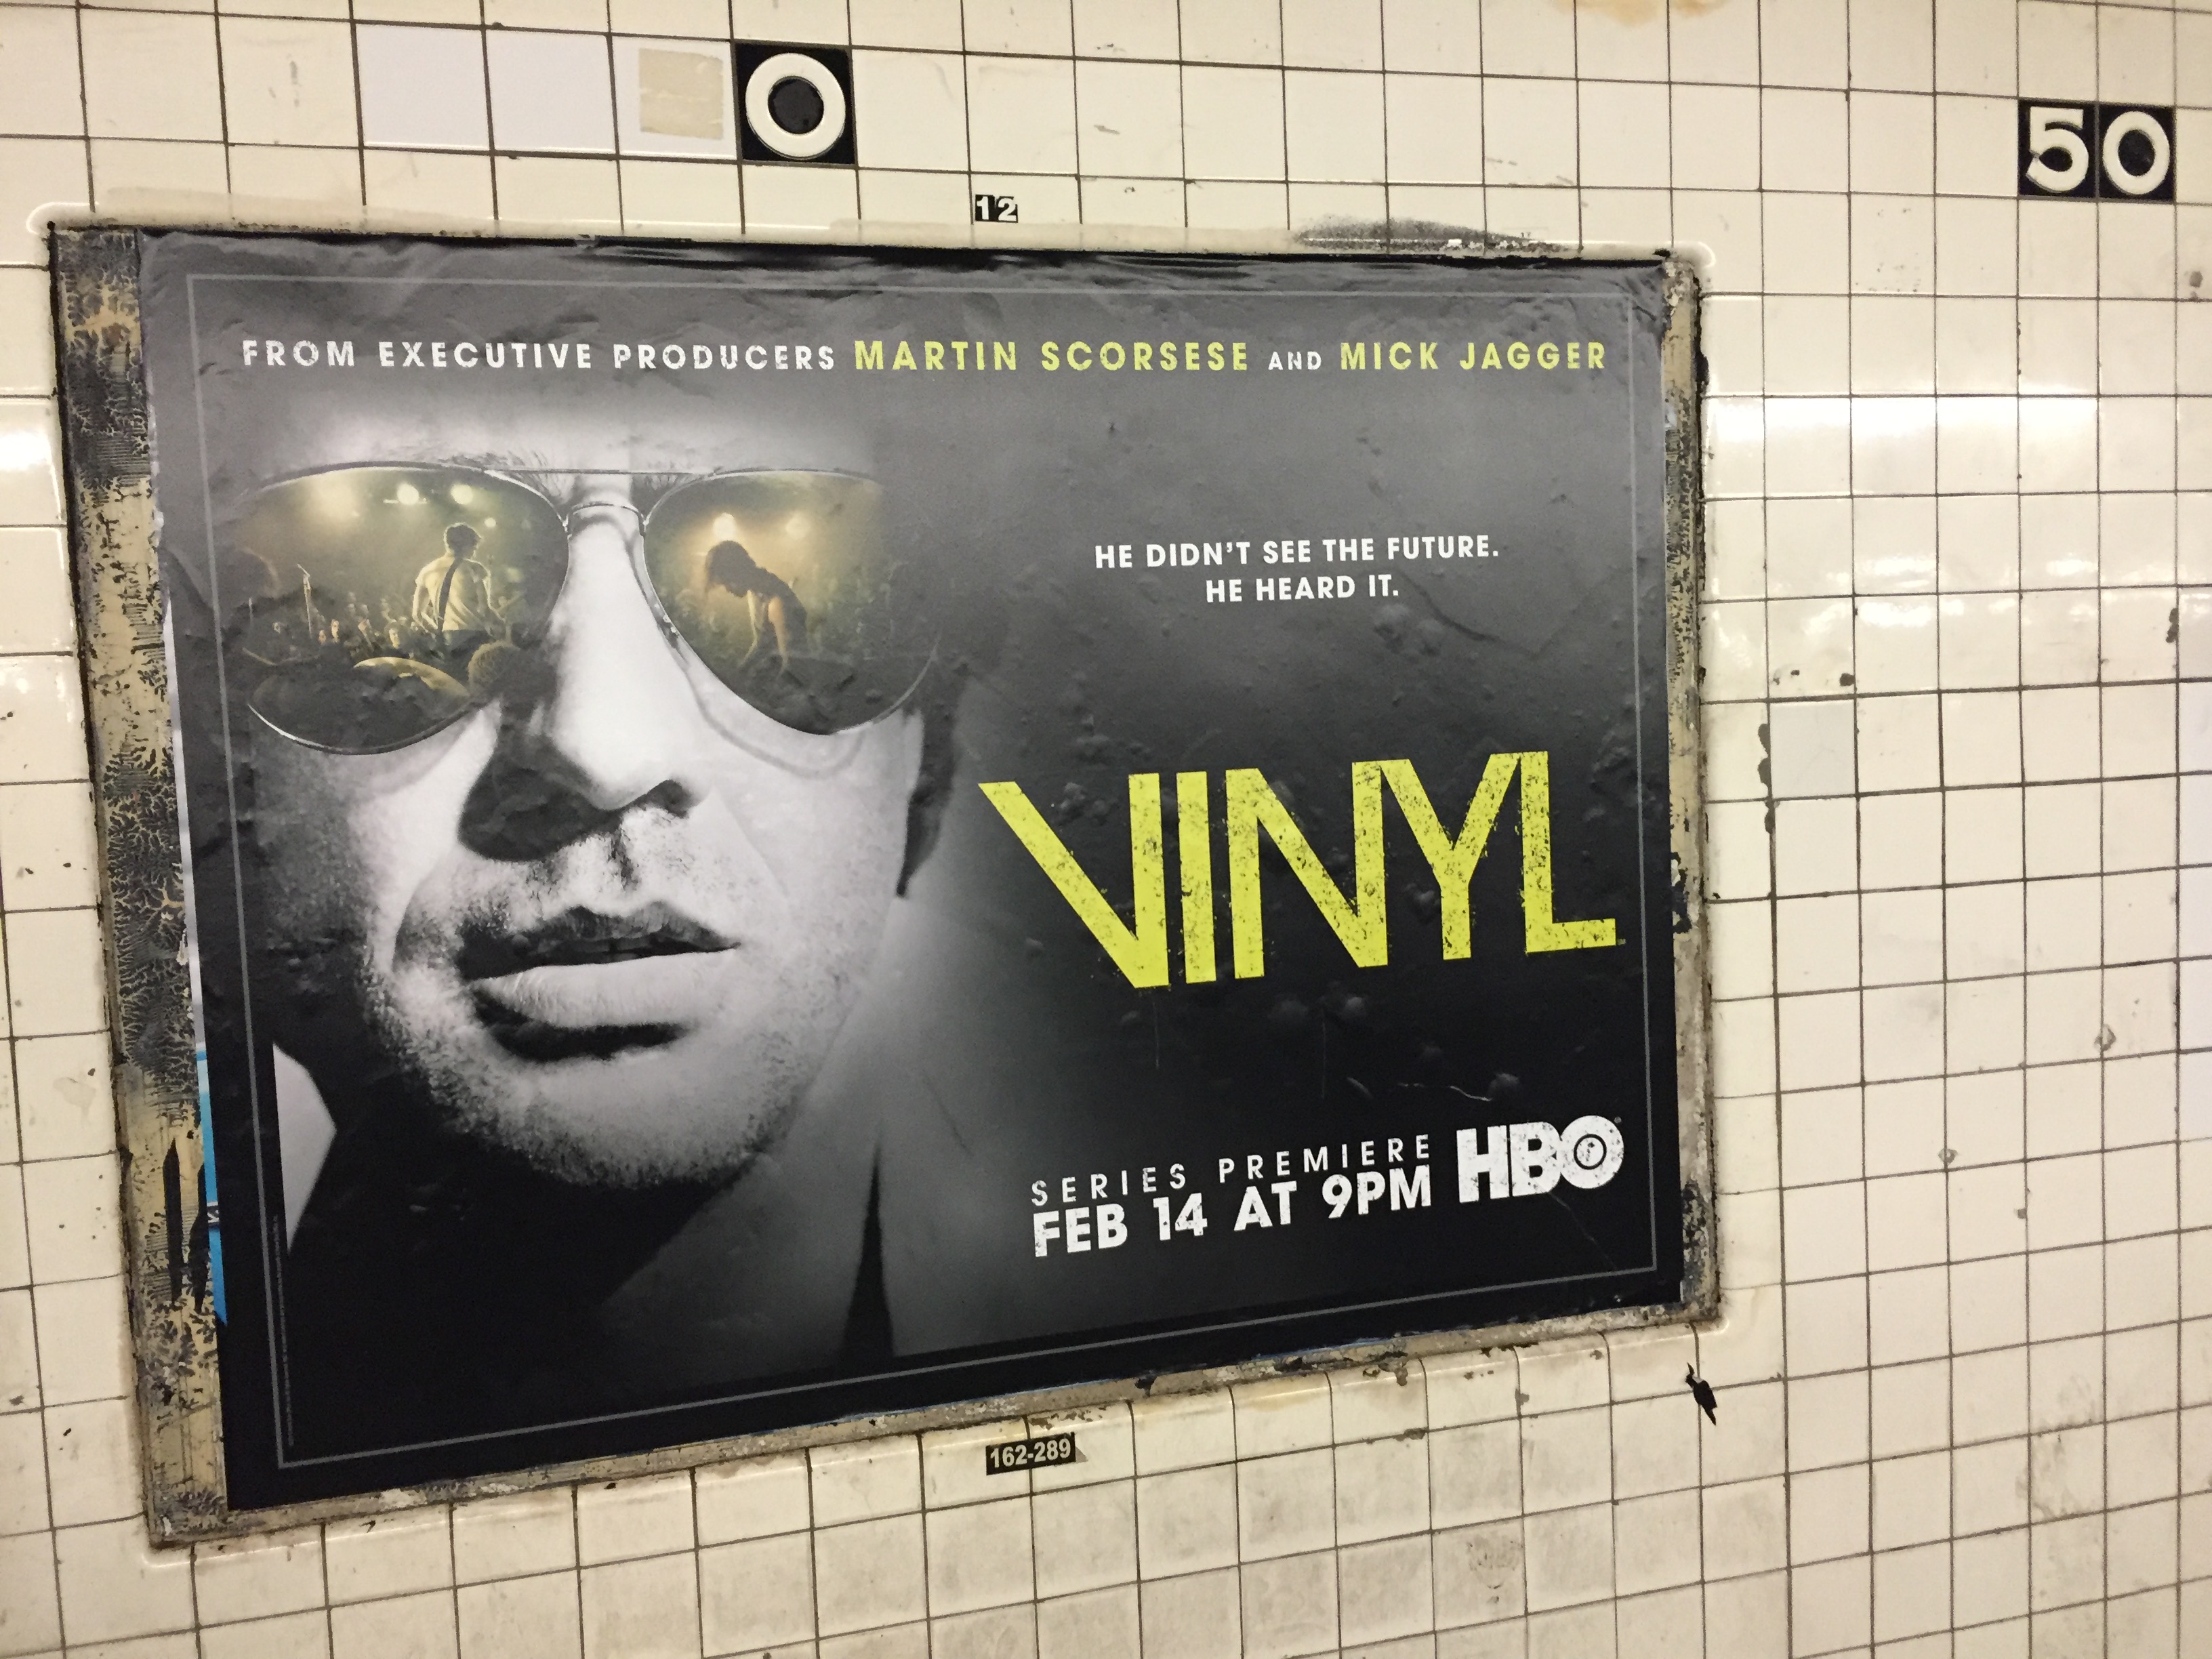 Viinyl subway poster